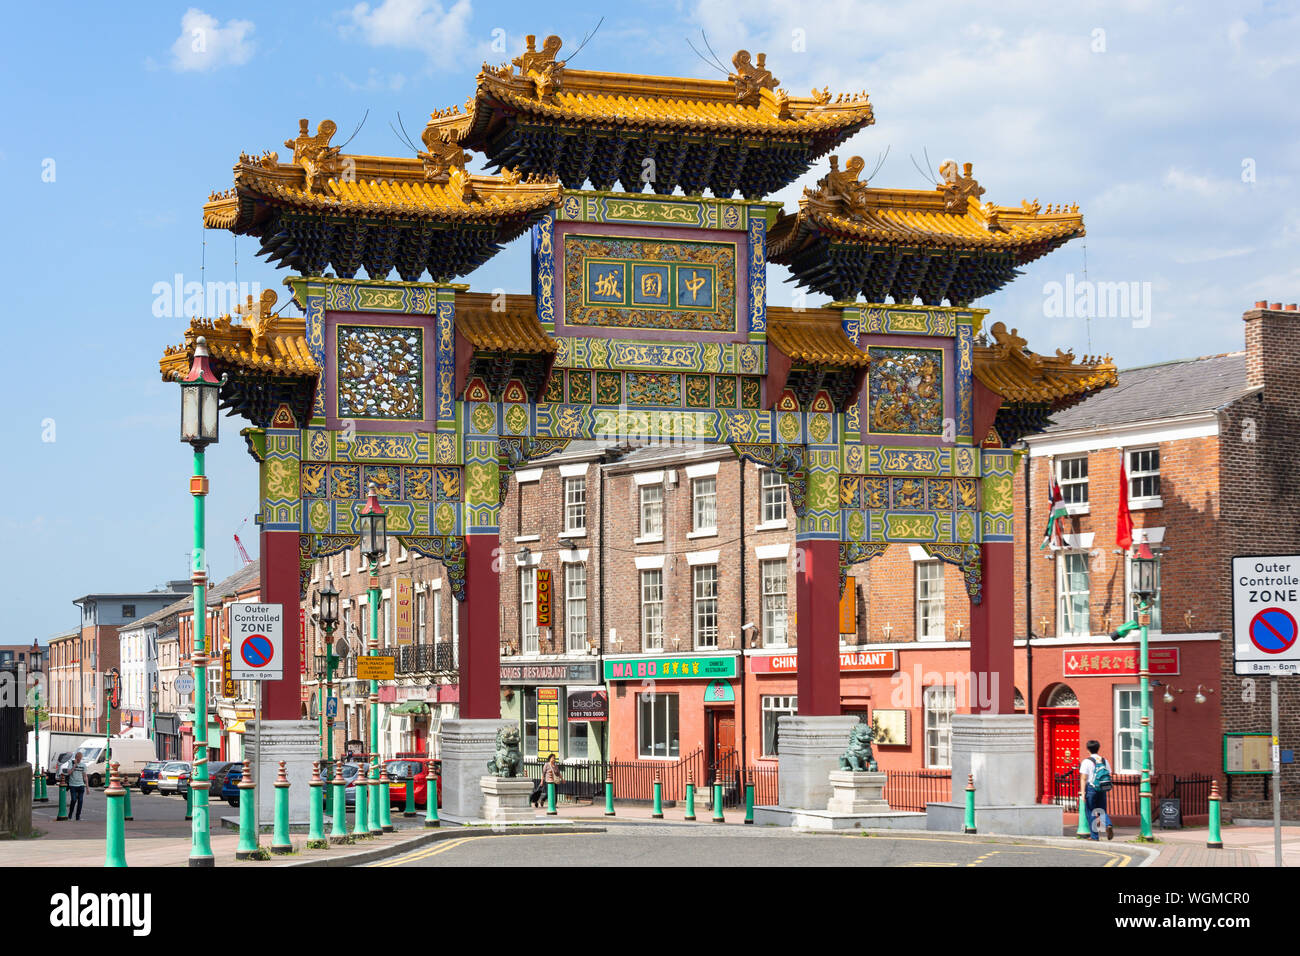 Chinatown Gate (Paifing), Chinatown, Nelson street, Liverpool, Merseyside, England, United Kingdom Stock Photo